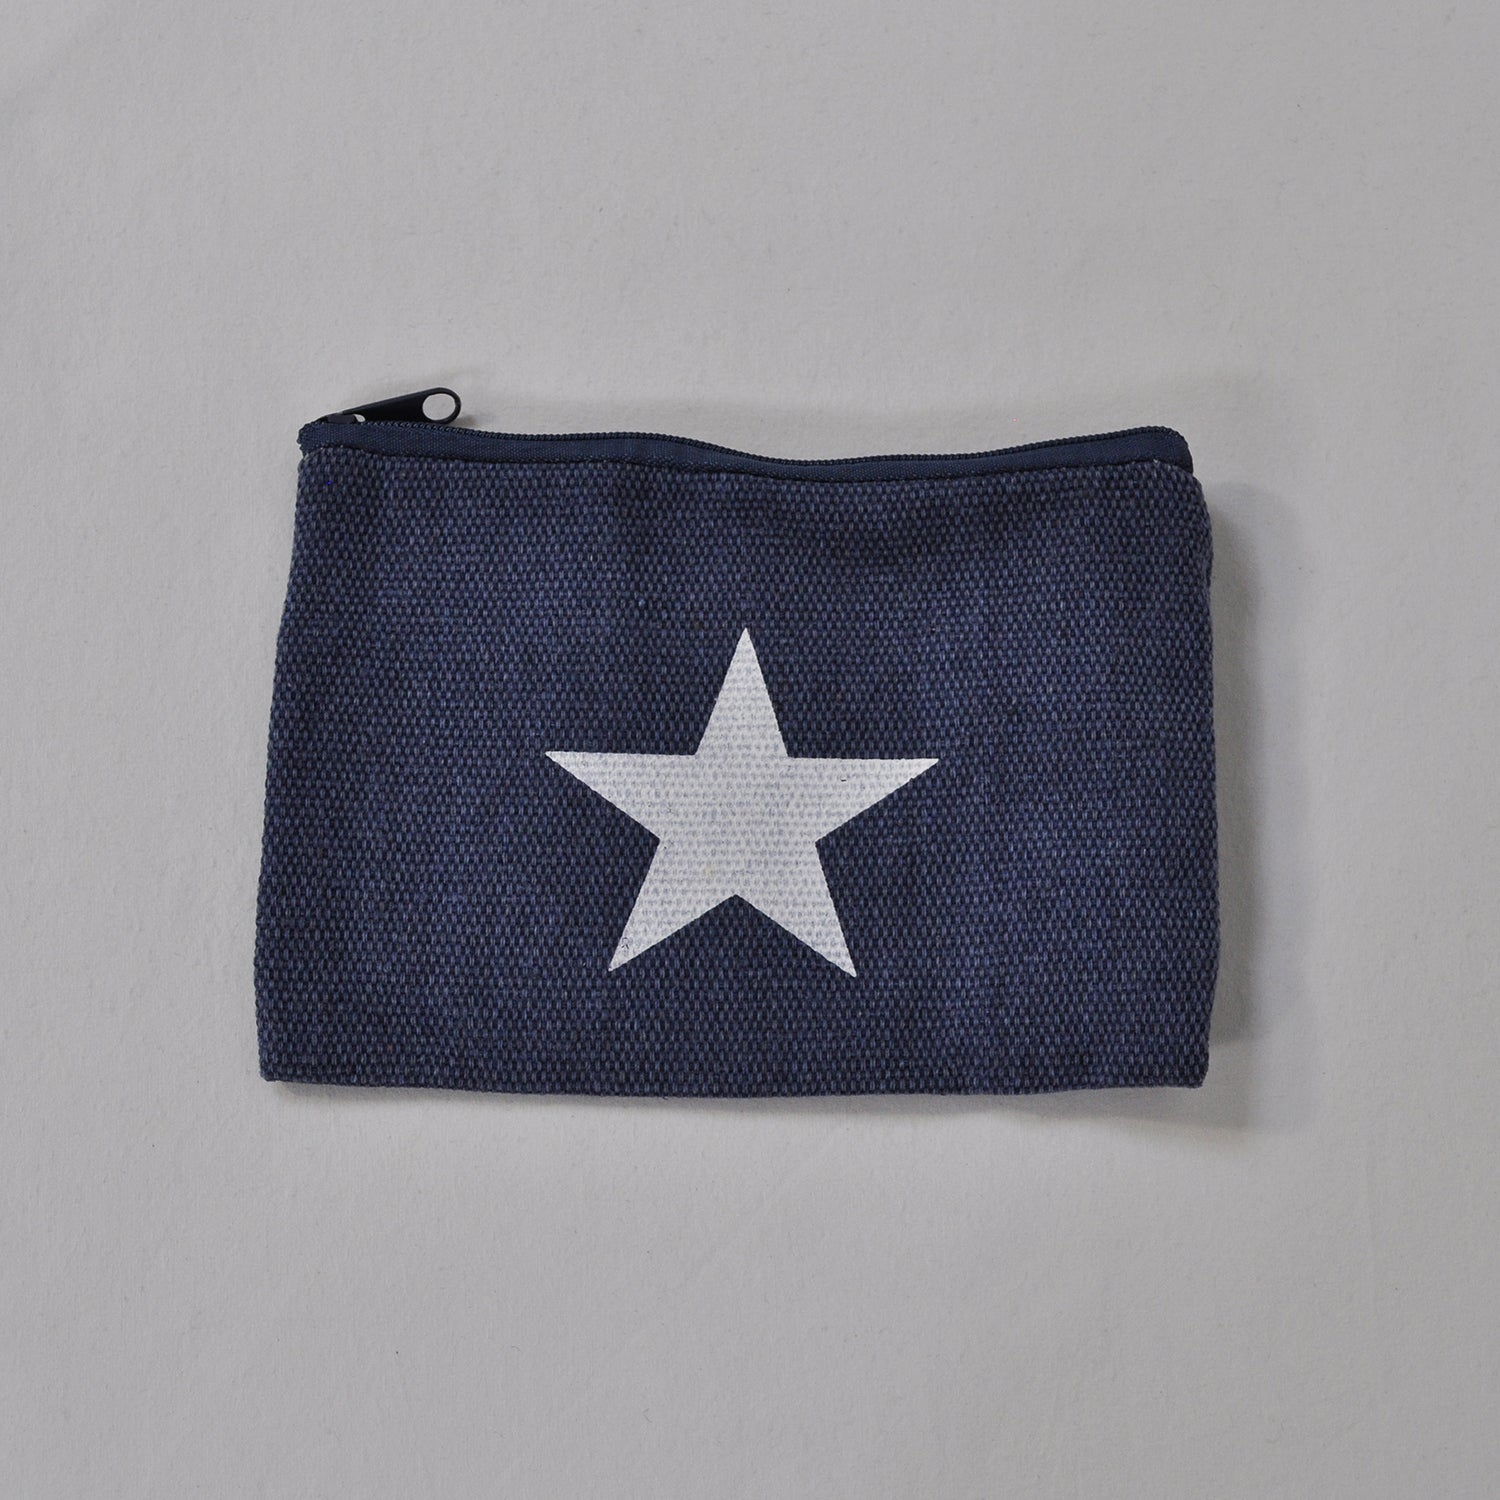 Blue star wallet